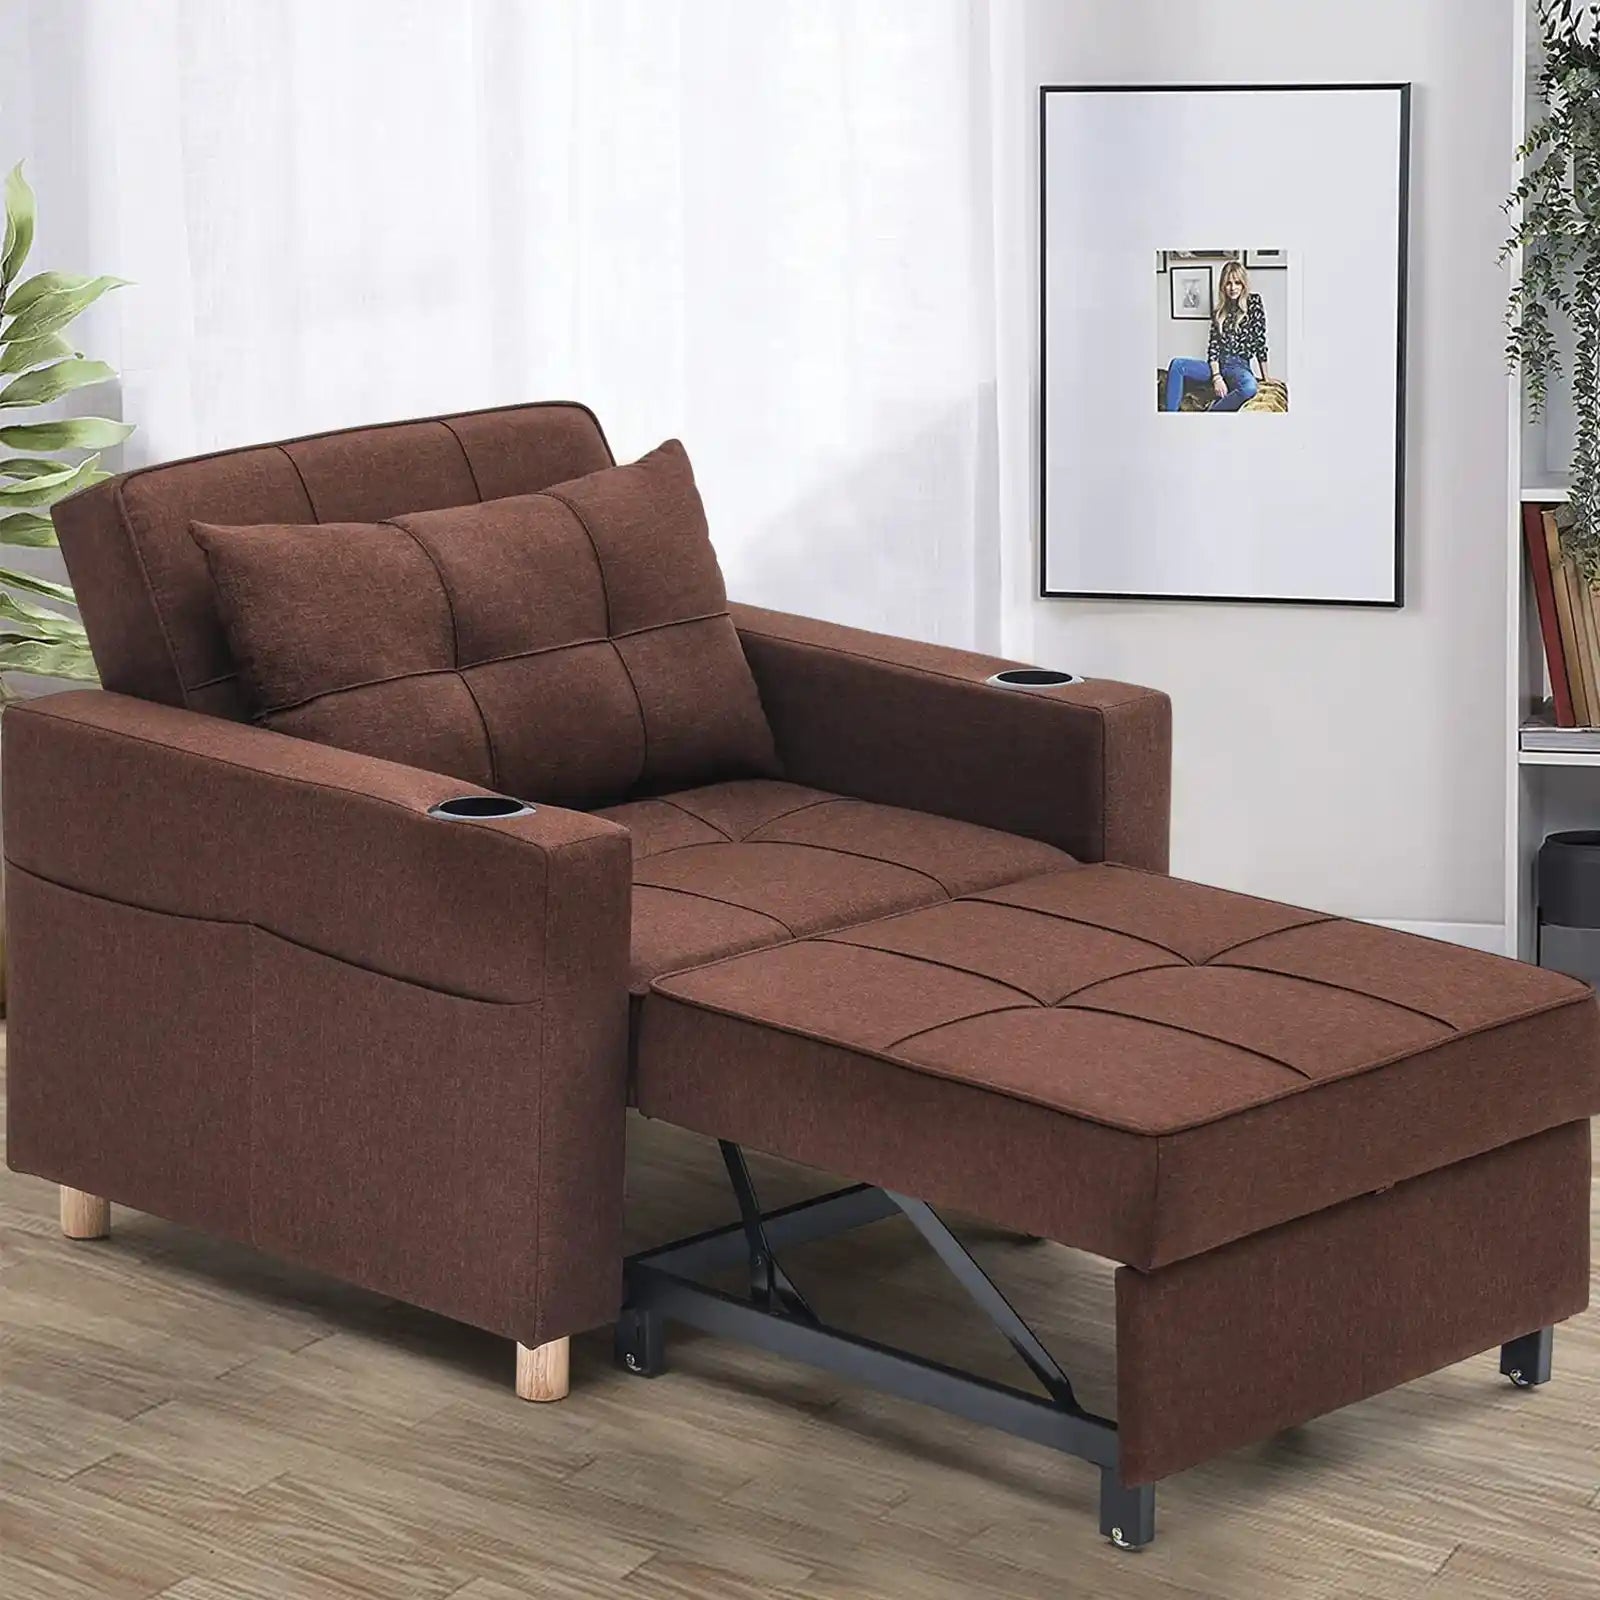 Sofá cama individual multifuncional, sofá futón plegable convertible 3 en  1, sillón reclinable ajustable con respaldo ajustable para sala de estar